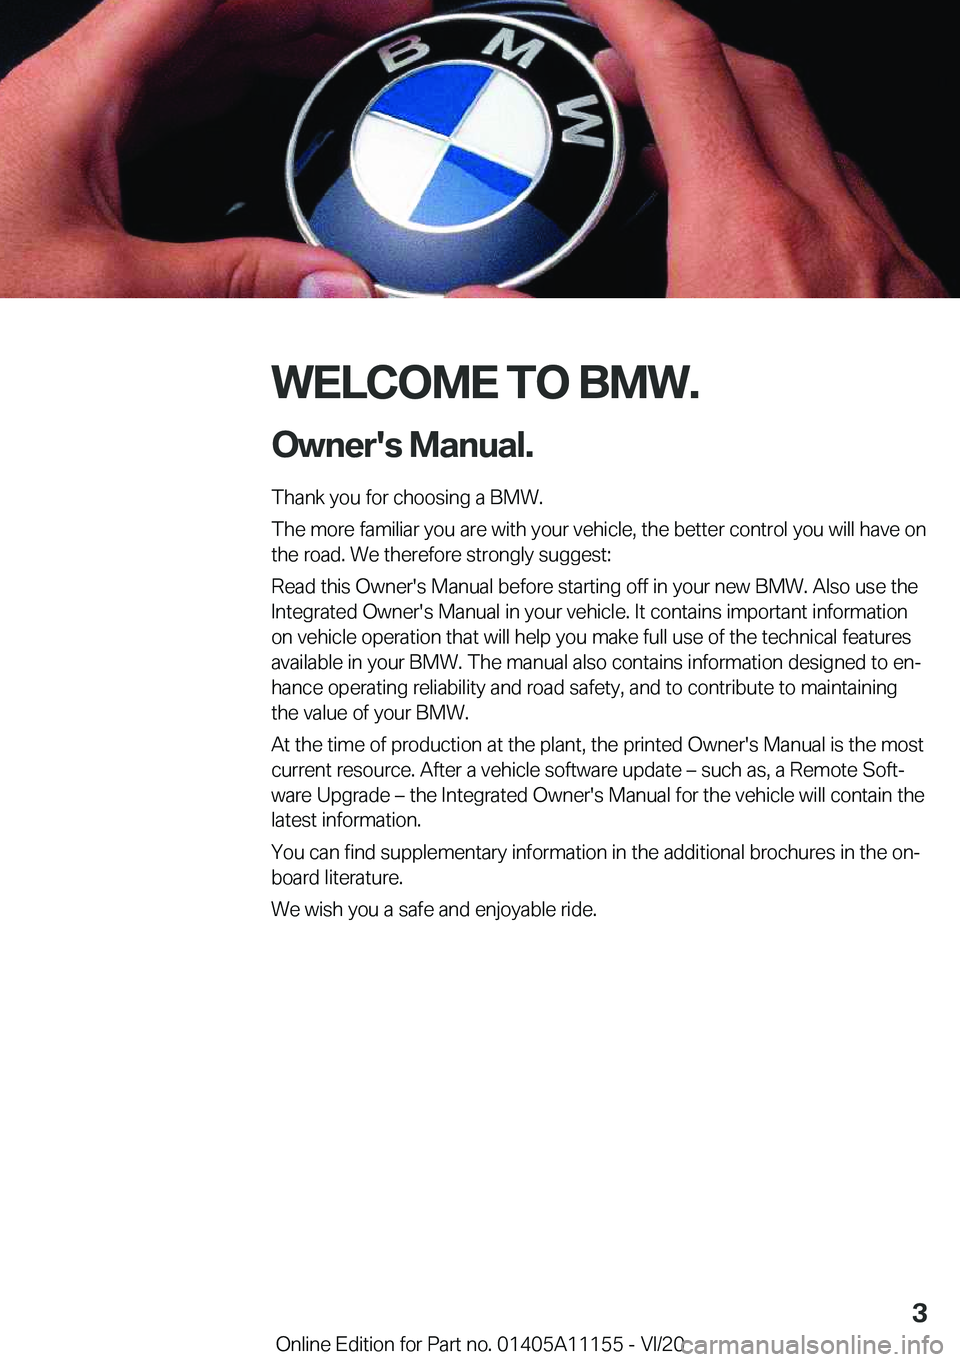 BMW 8 SERIES COUPE 2021  Owners Manual �W�E�L�C�O�M�E��T�O��B�M�W�.�O�w�n�e�r�'�s��M�a�n�u�a�l�.
�T�h�a�n�k��y�o�u��f�o�r��c�h�o�o�s�i�n�g��a��B�M�W�.
�T�h�e��m�o�r�e��f�a�m�i�l�i�a�r��y�o�u��a�r�e��w�i�t�h��y�o�u�r��v�e